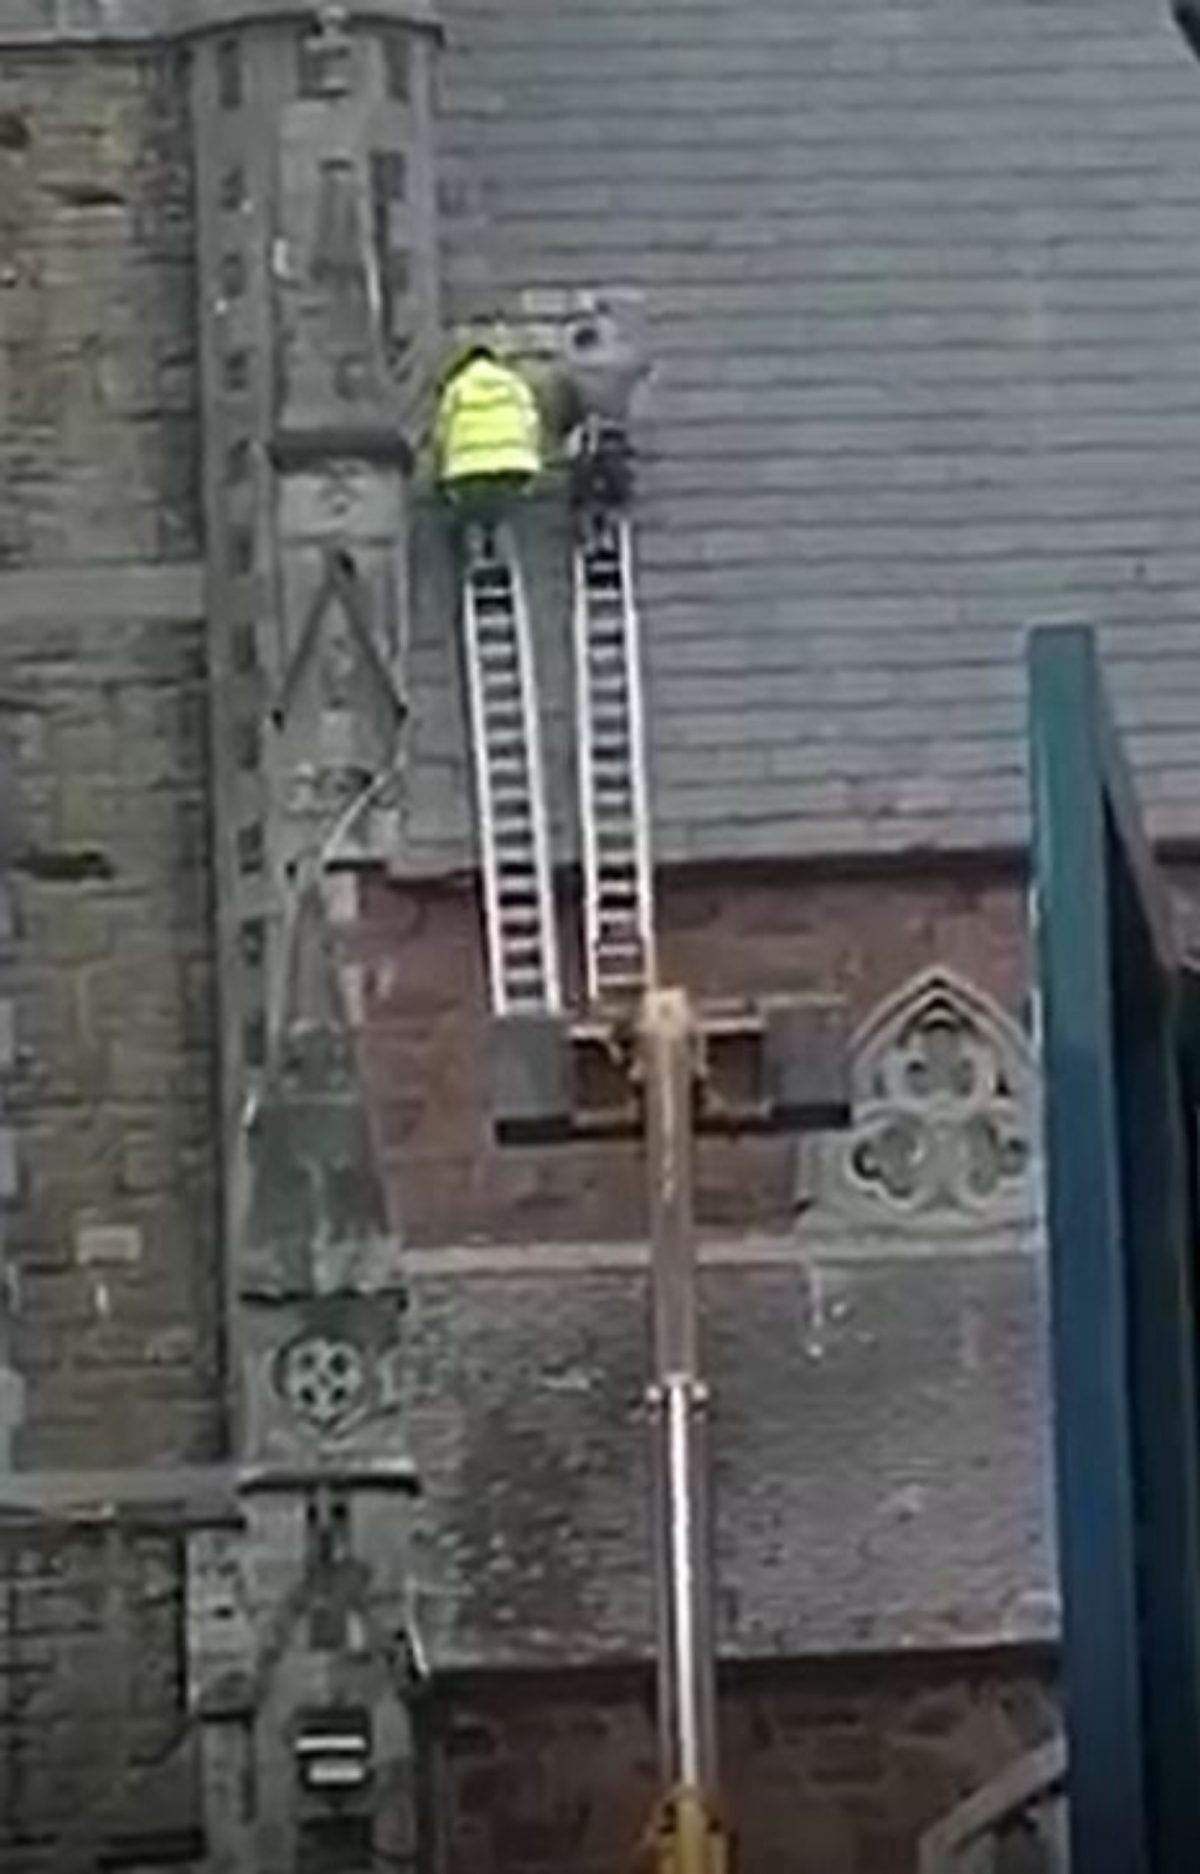 Both workmen stand on each ladder